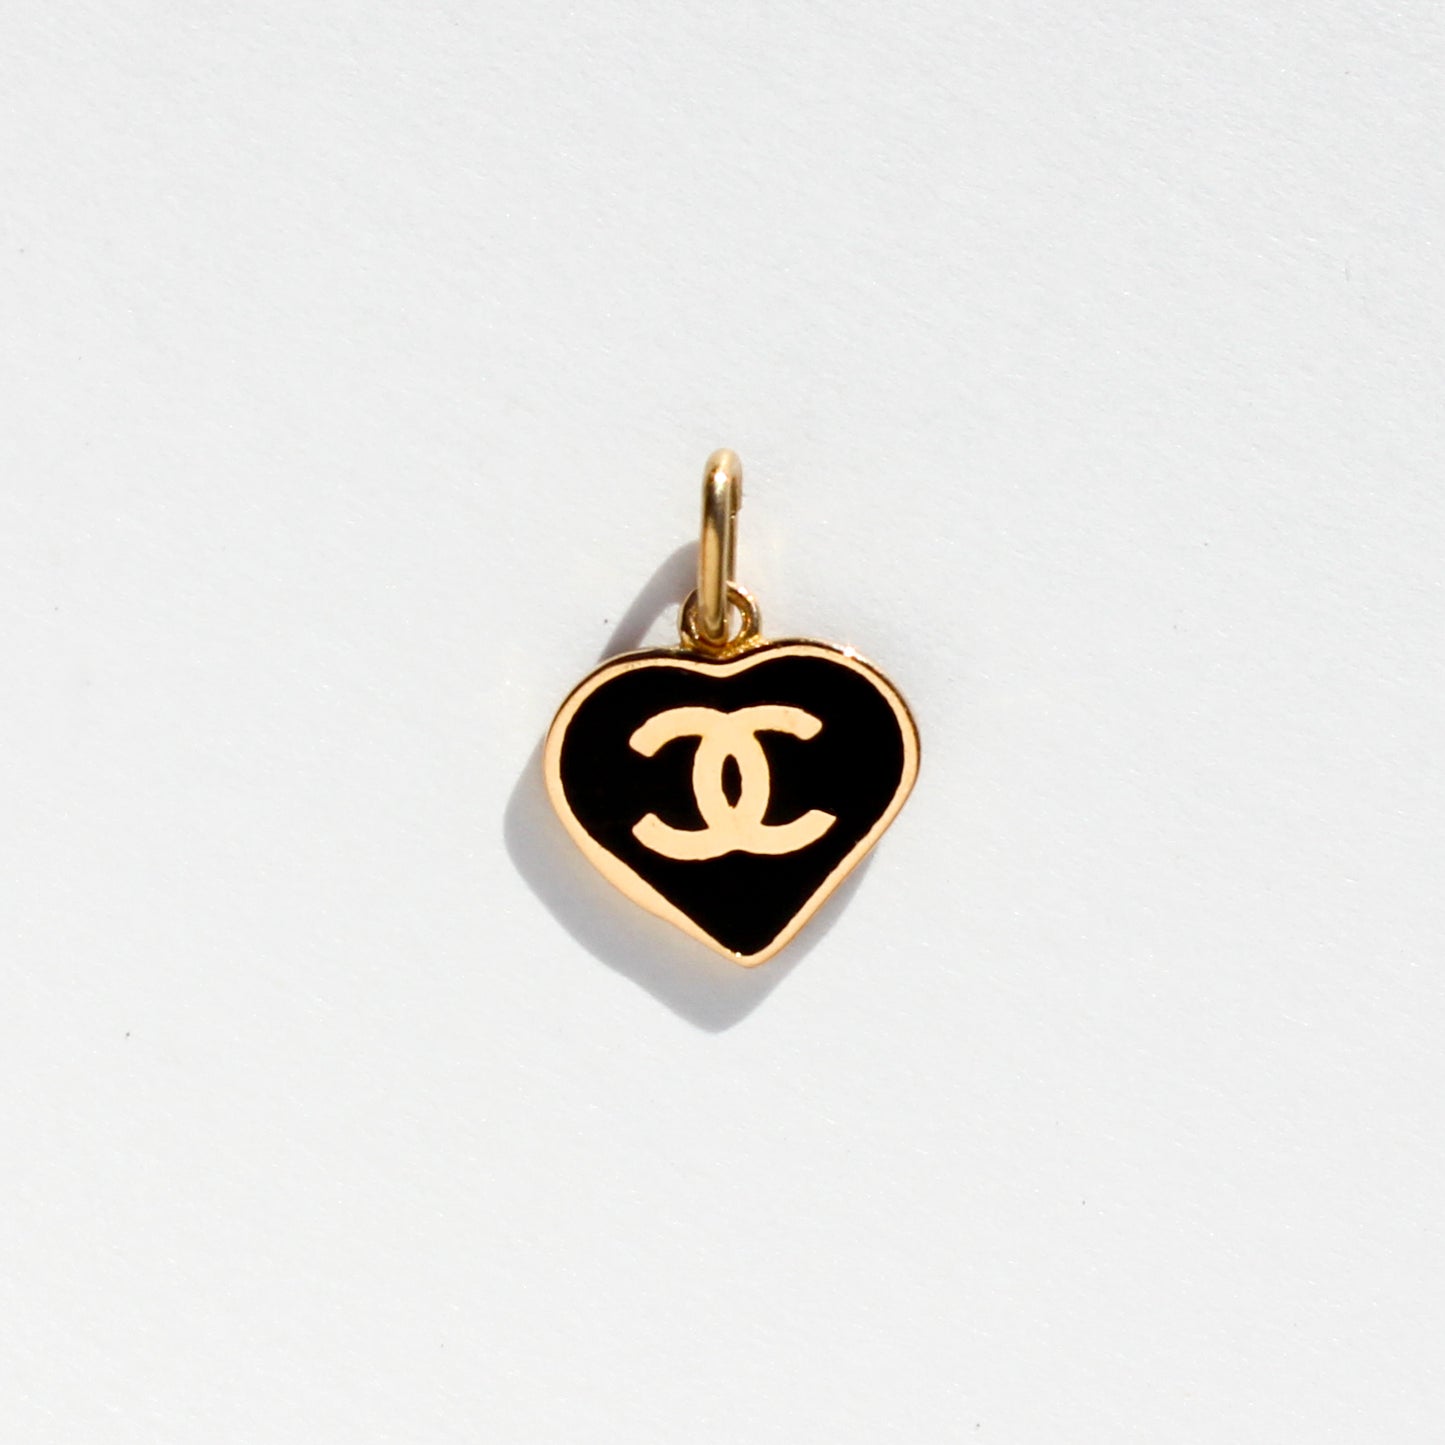 Chanel VTG 10k gold charm